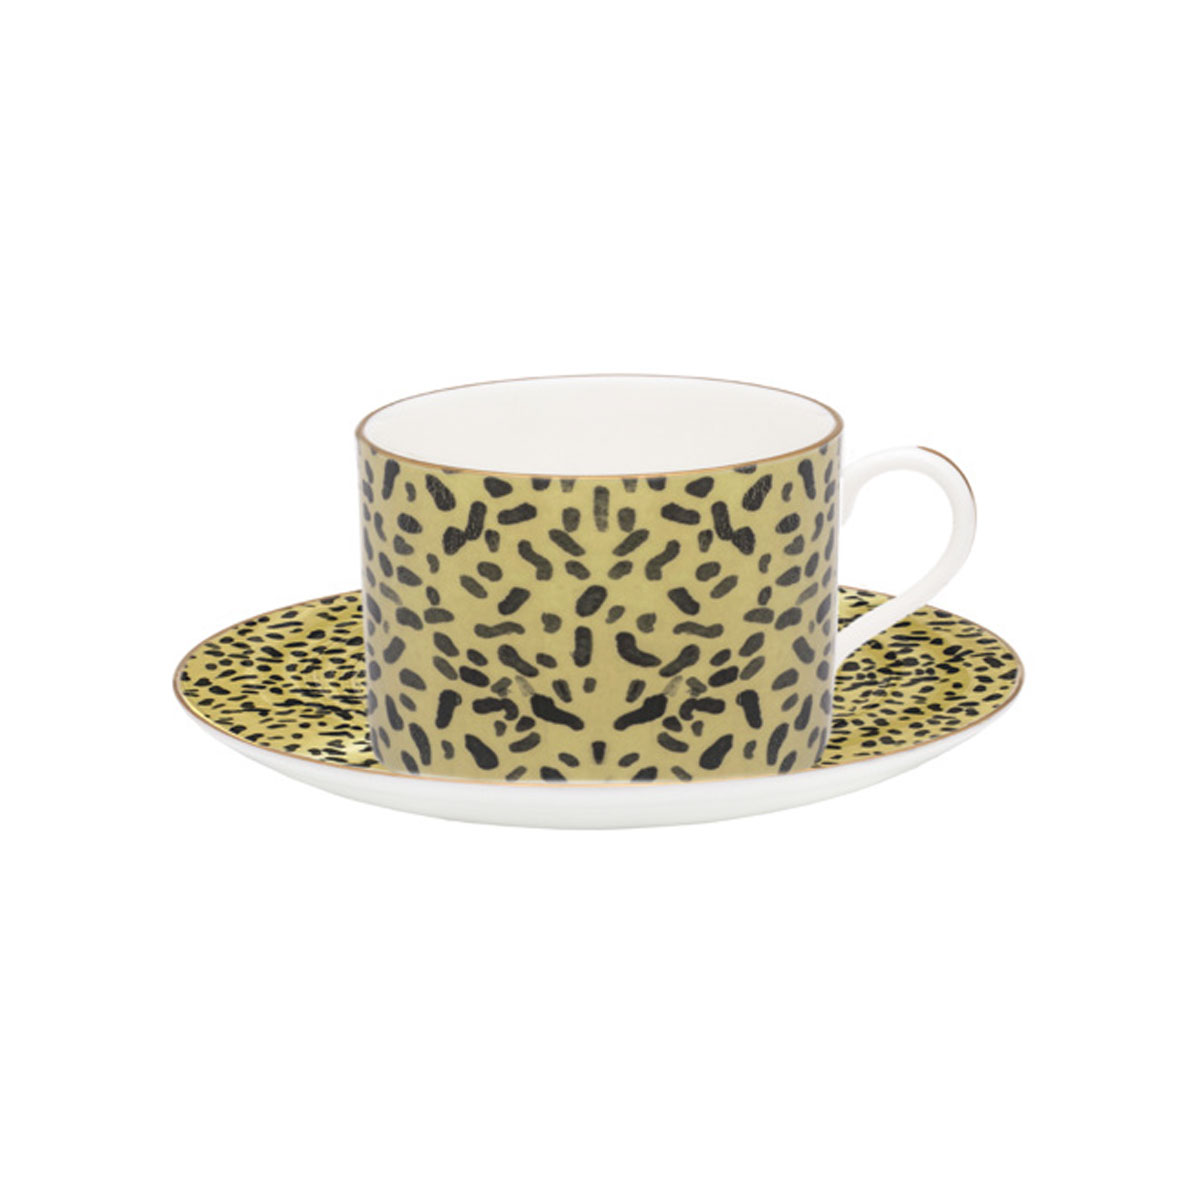 Halcyon Days Leopard Teacup and Saucer